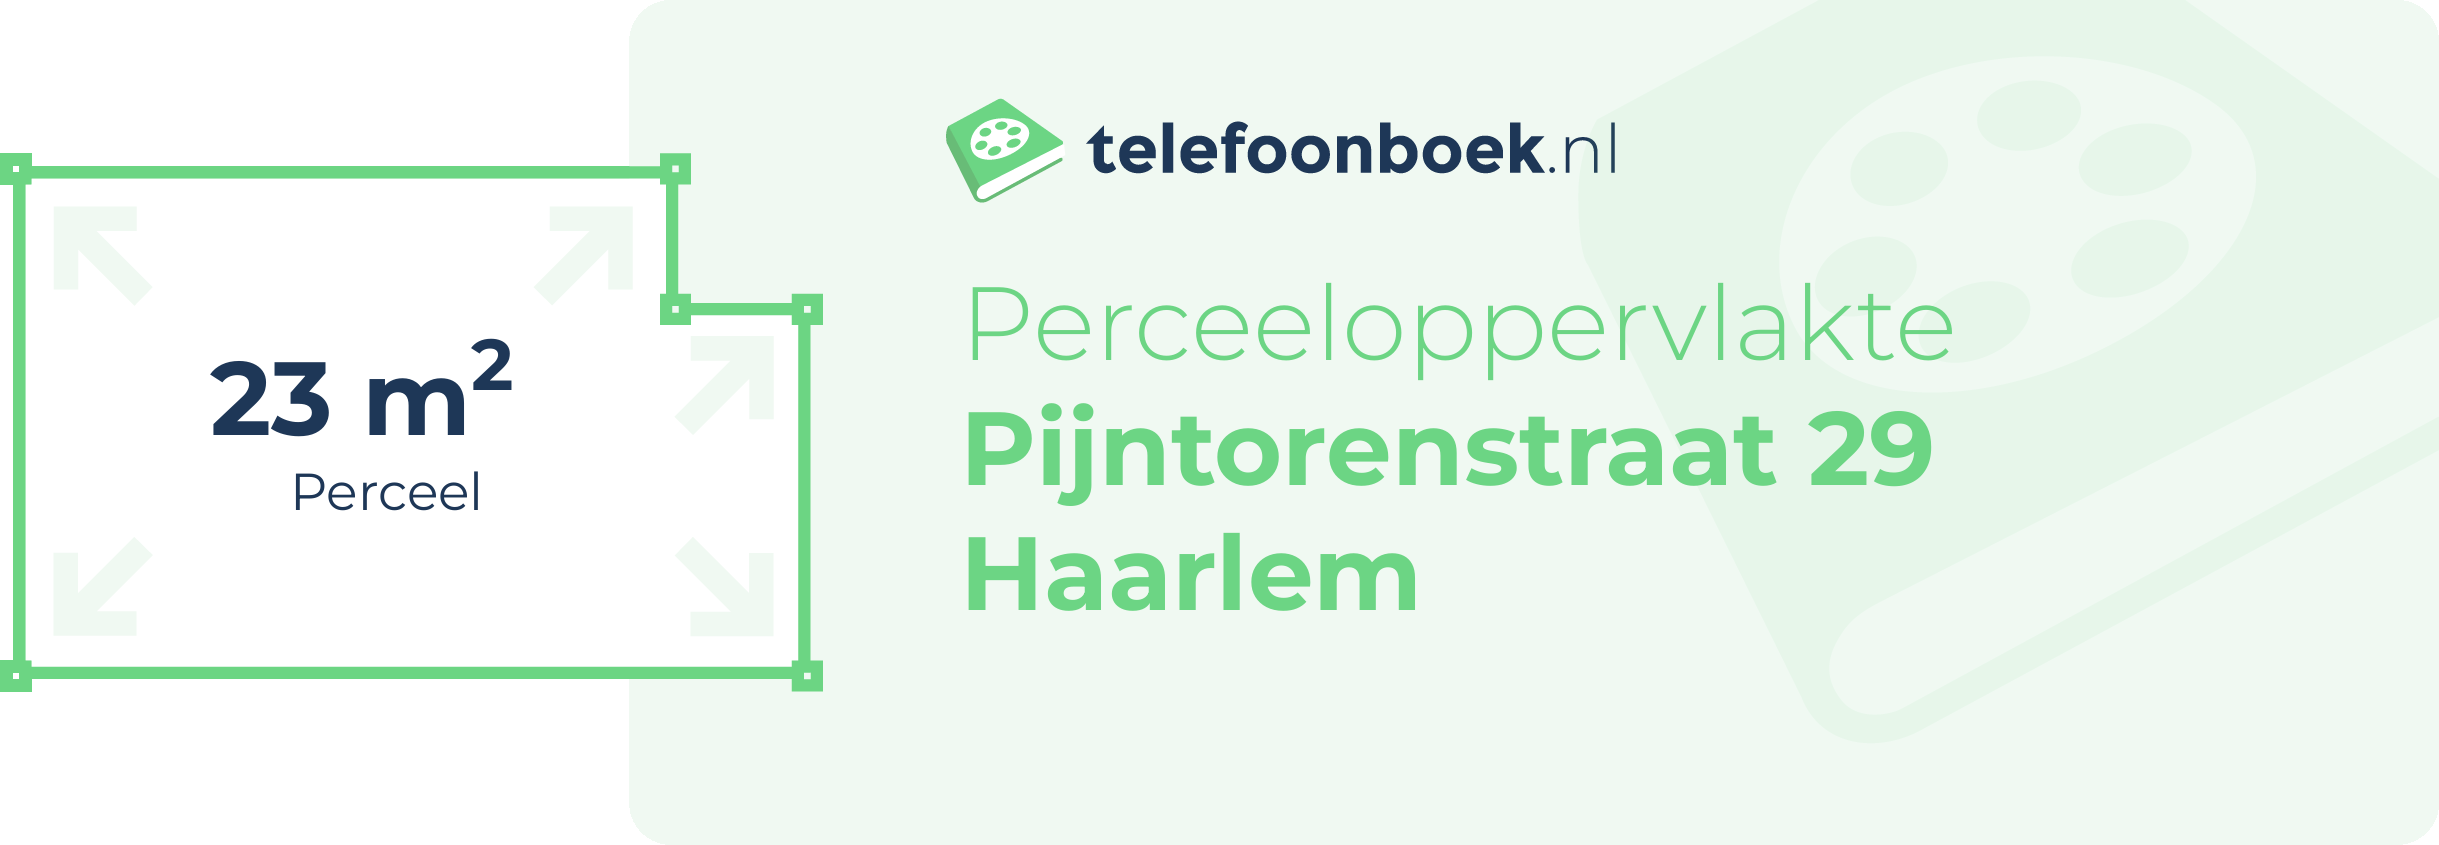 Perceeloppervlakte Pijntorenstraat 29 Haarlem